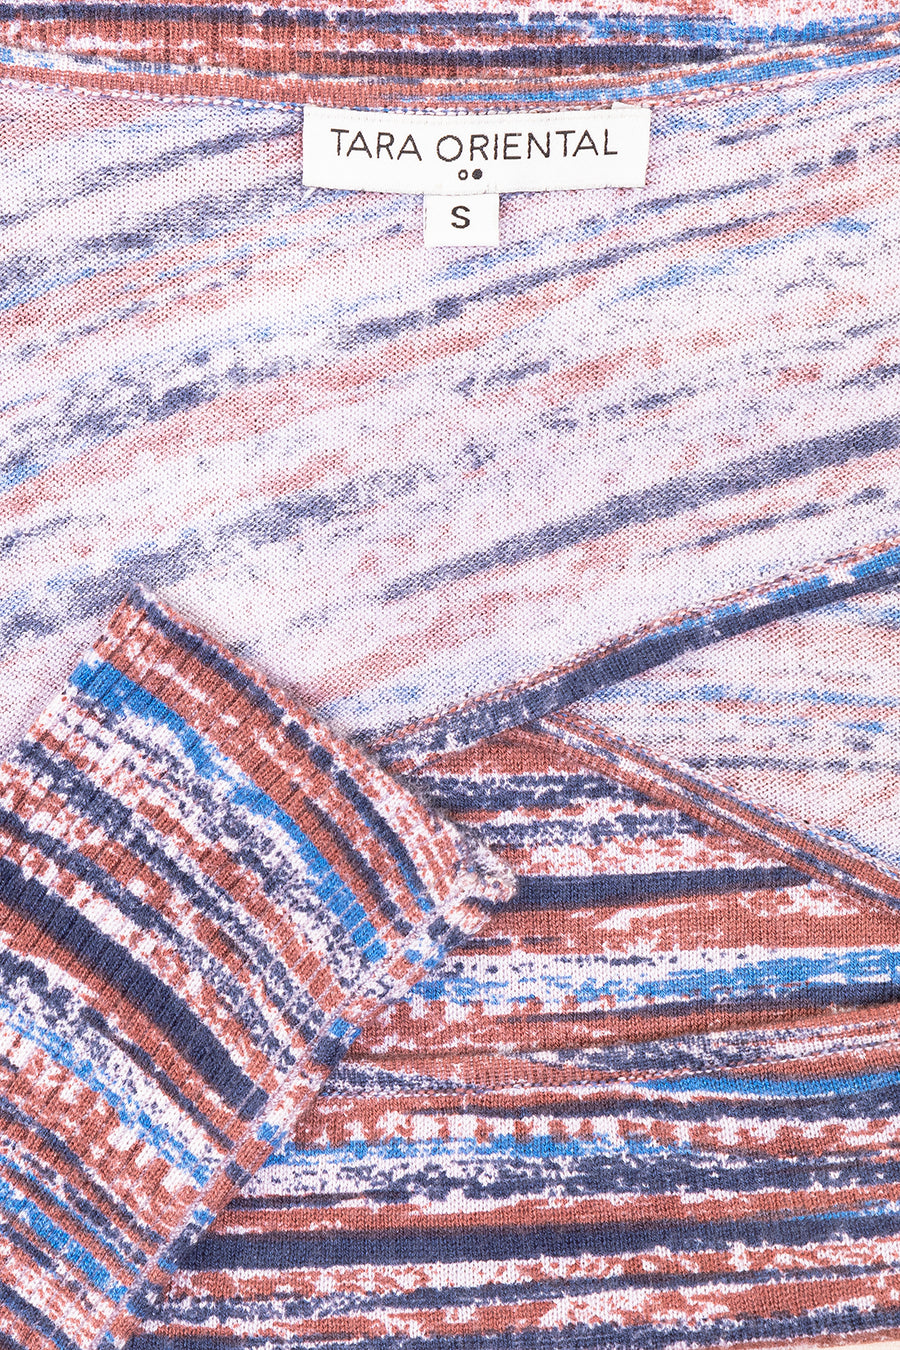 Women's Silk Wool Cashmere Textured Printed Top